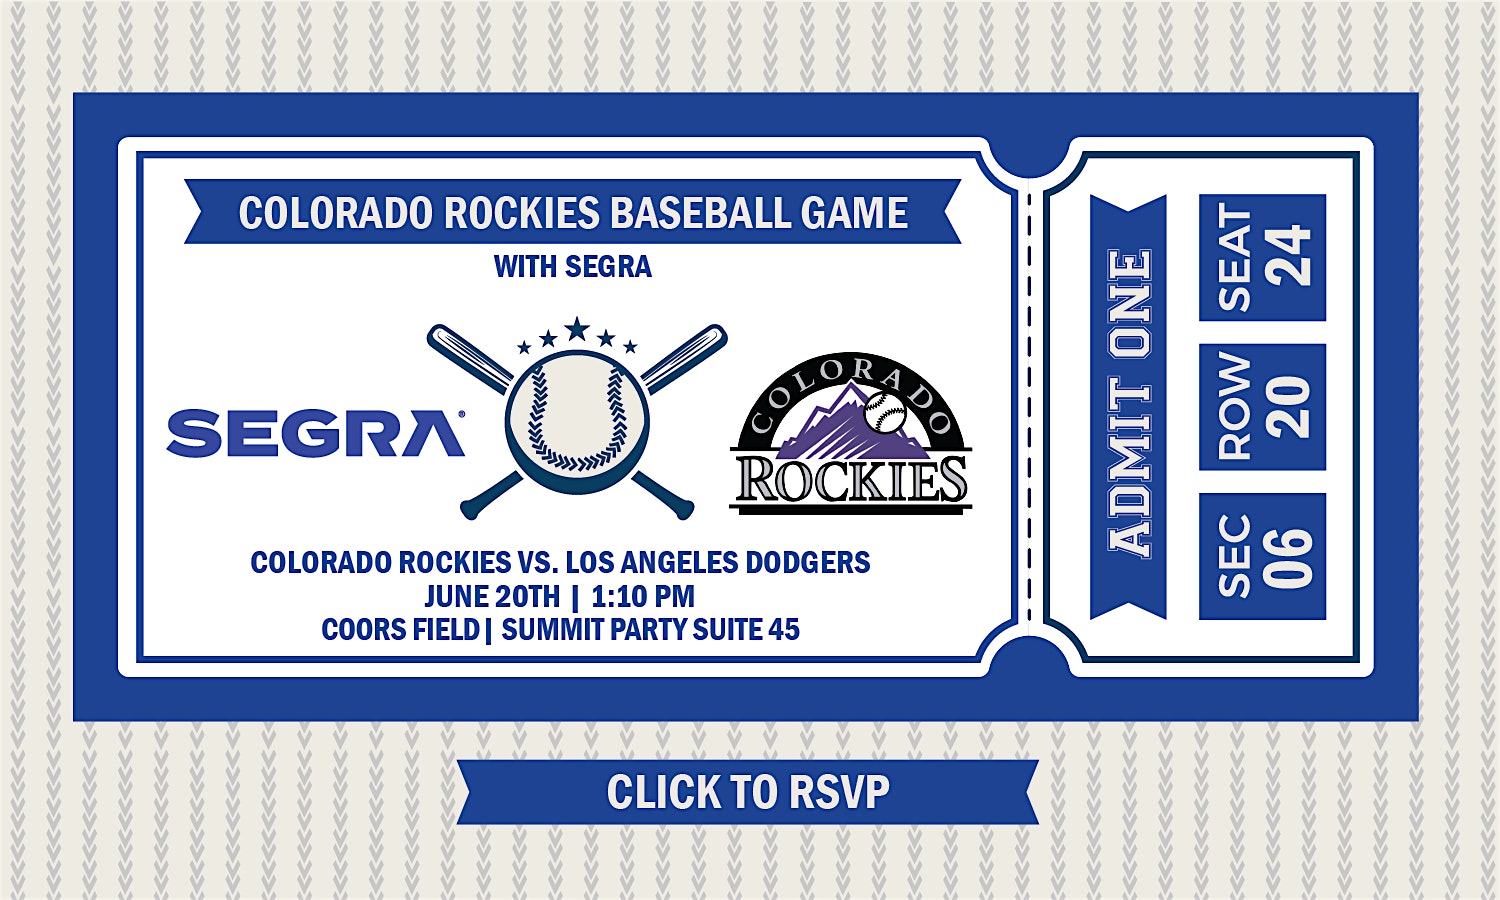 Colorado Rockies Baseball Game with SEGRA